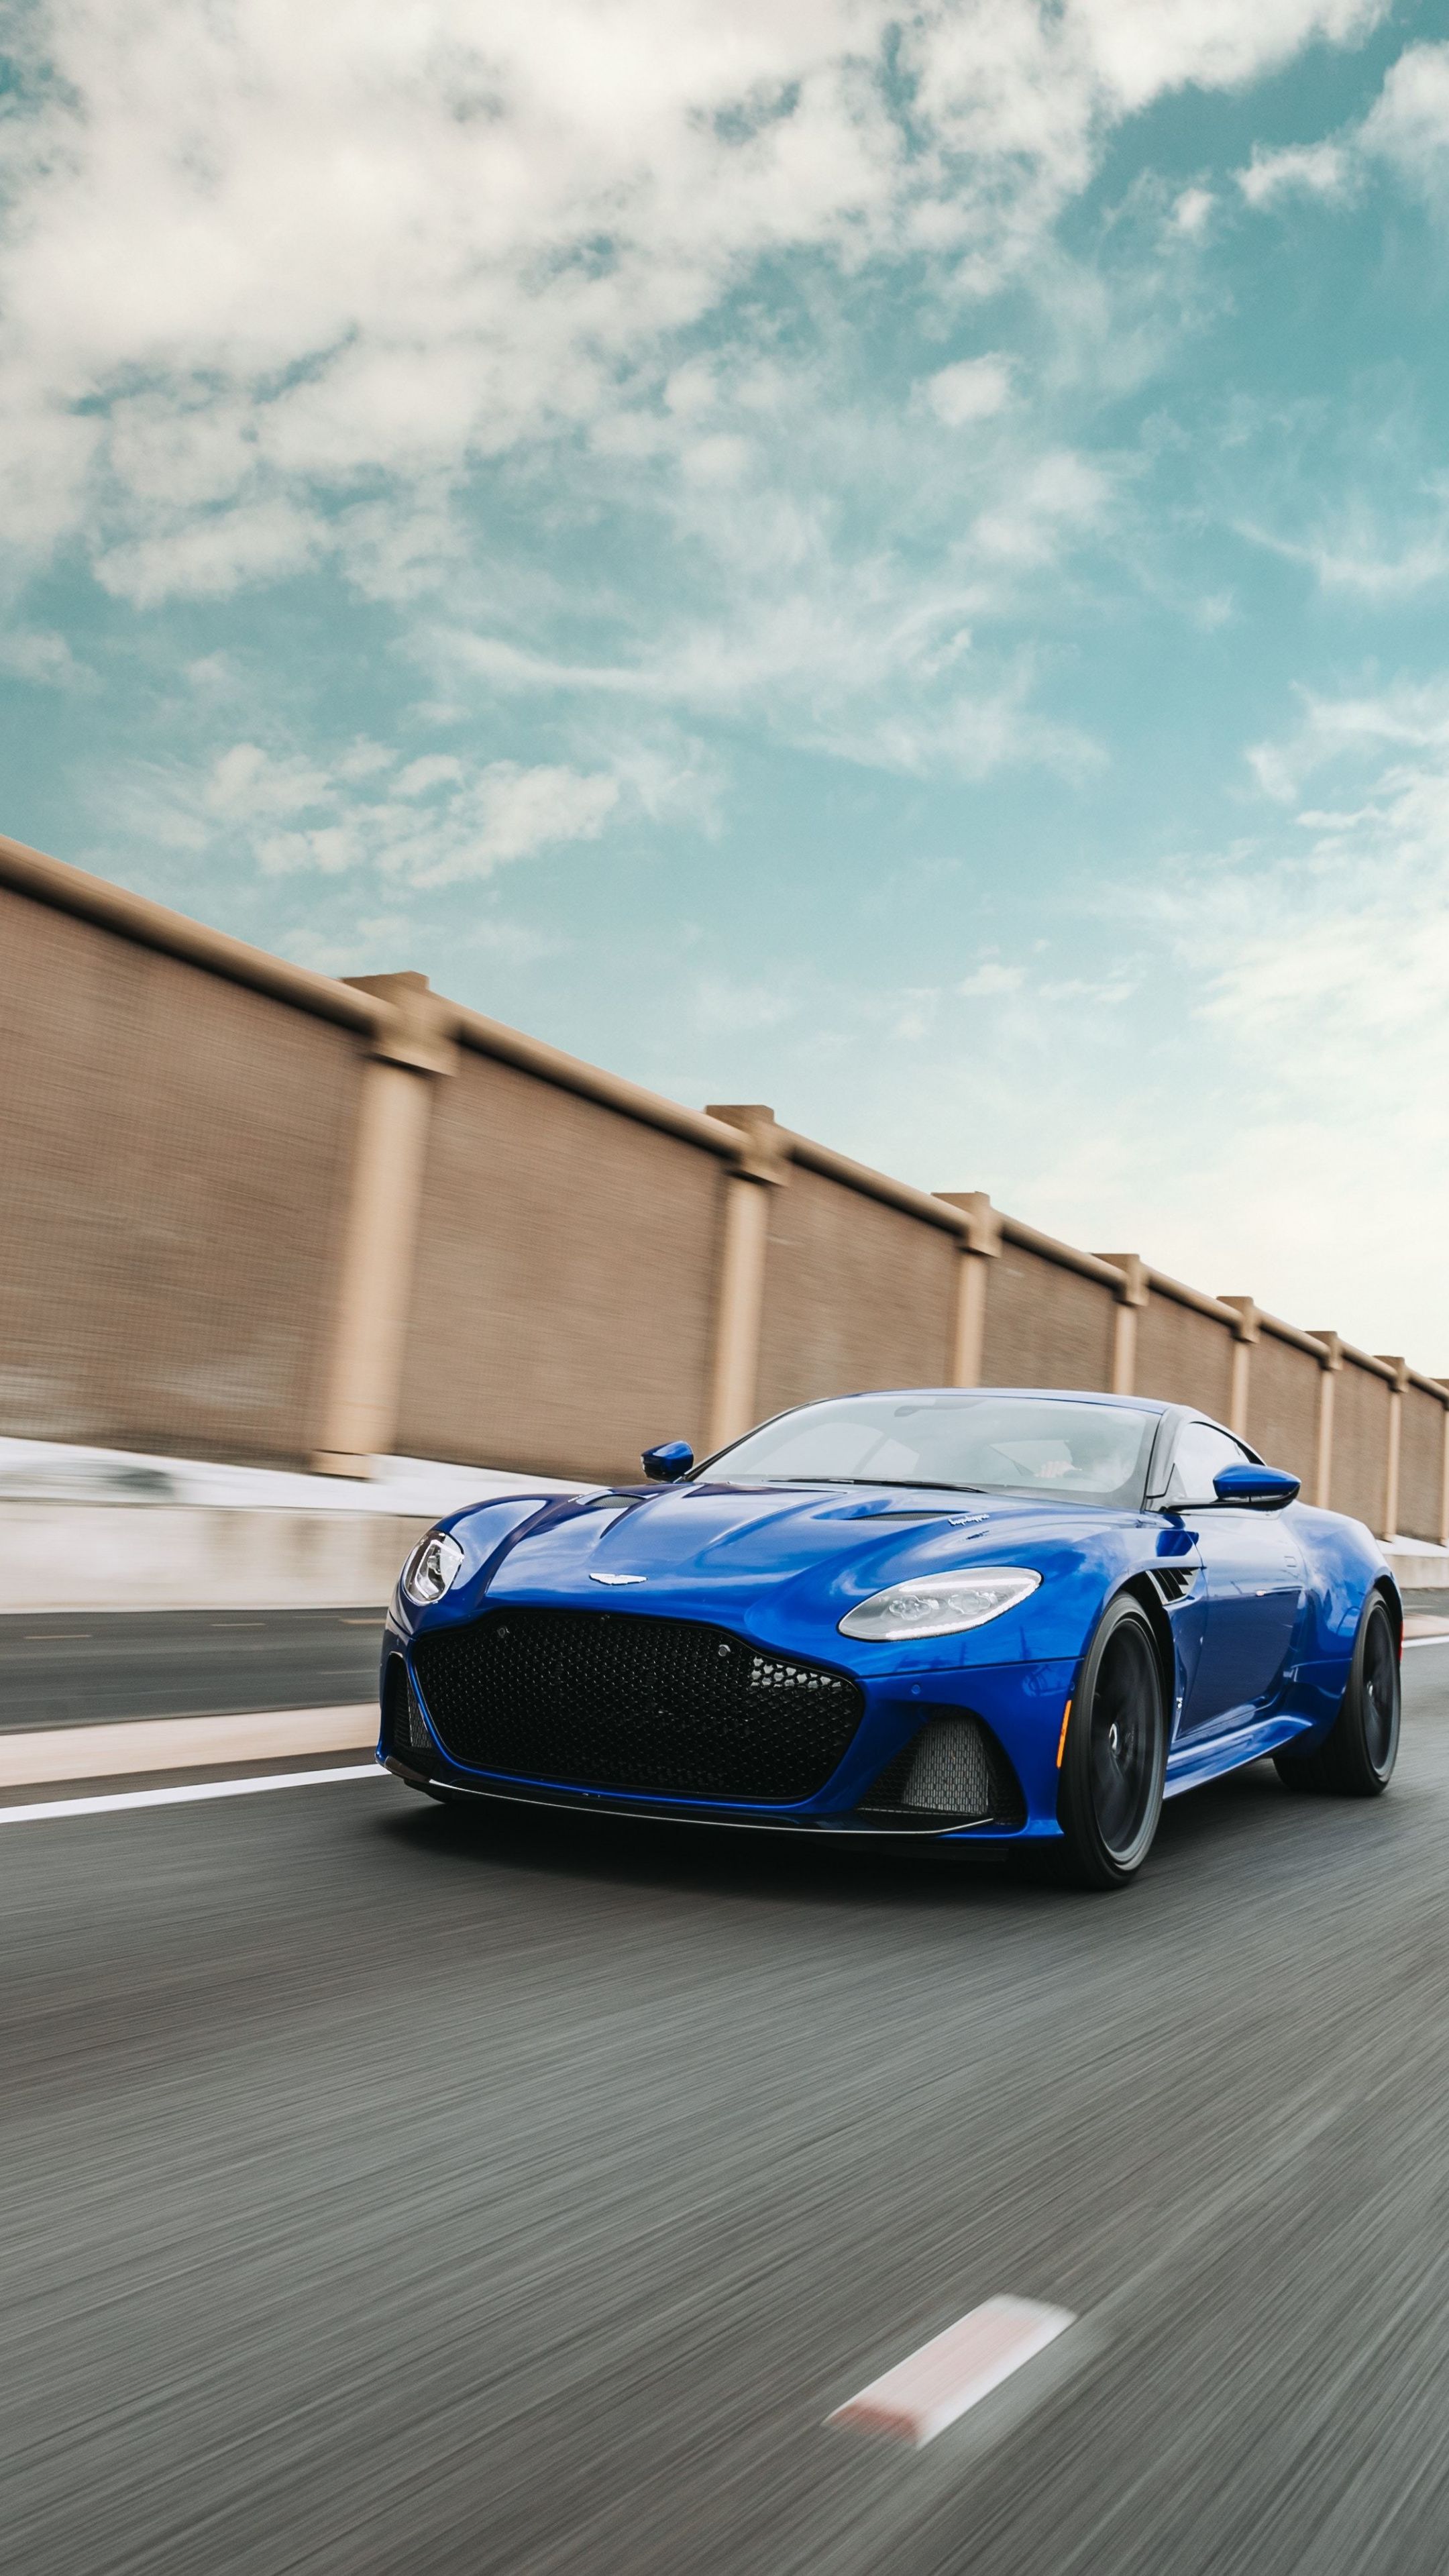 Aston Martin, blue, sports car wallpaper. Aston martin, Sports car, Sports car wallpaper